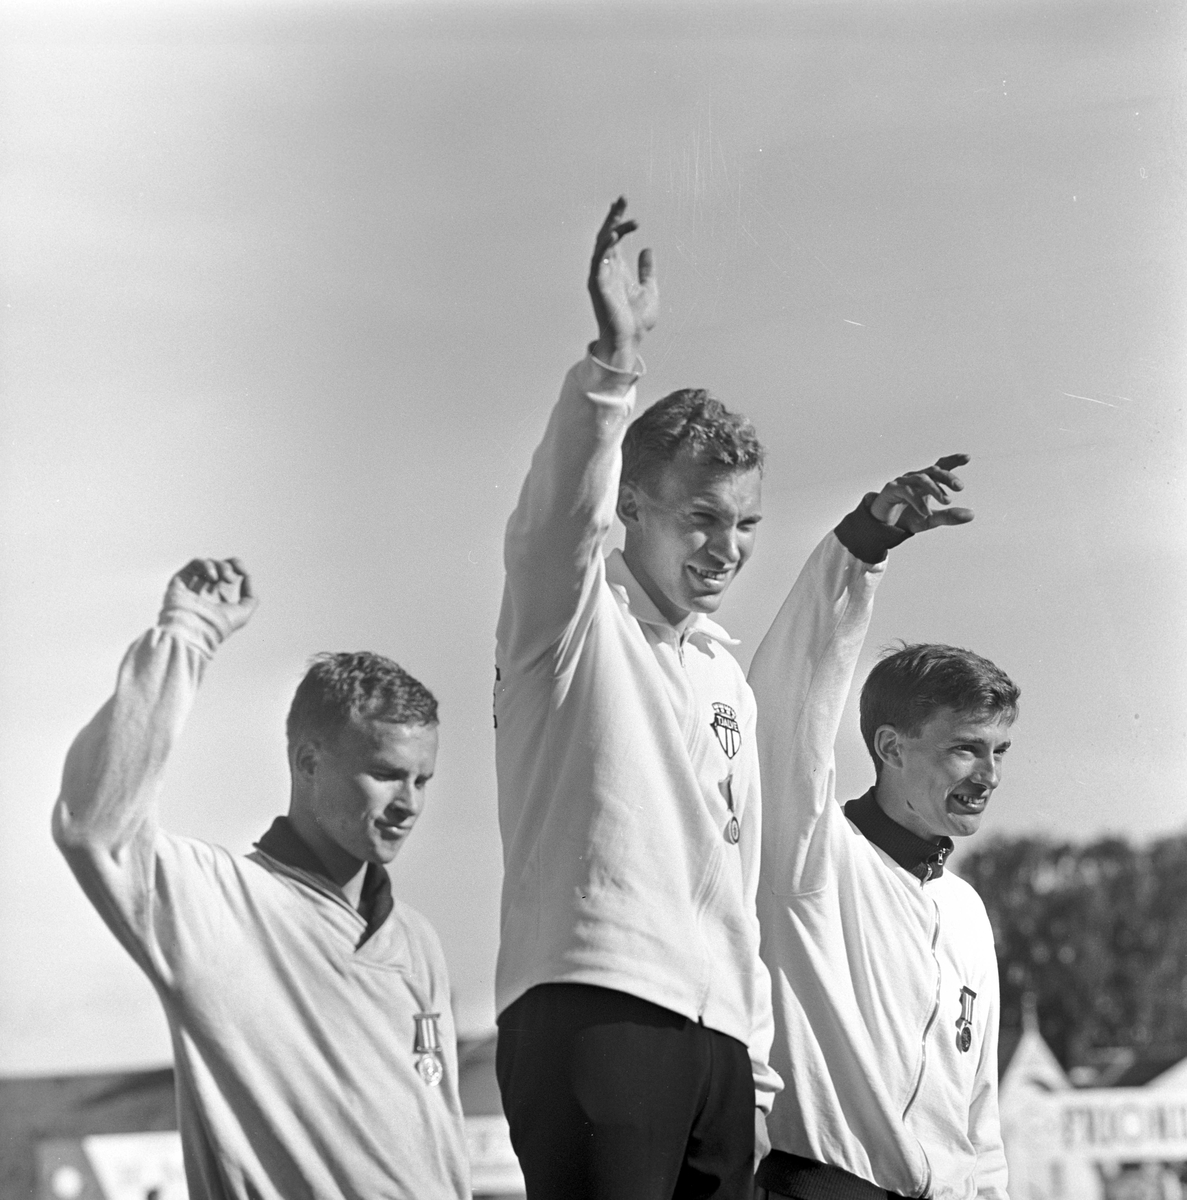 Serie. Friidrettslandskamp Norge - Tsjekoslovakia.
Fotografert 1964.
